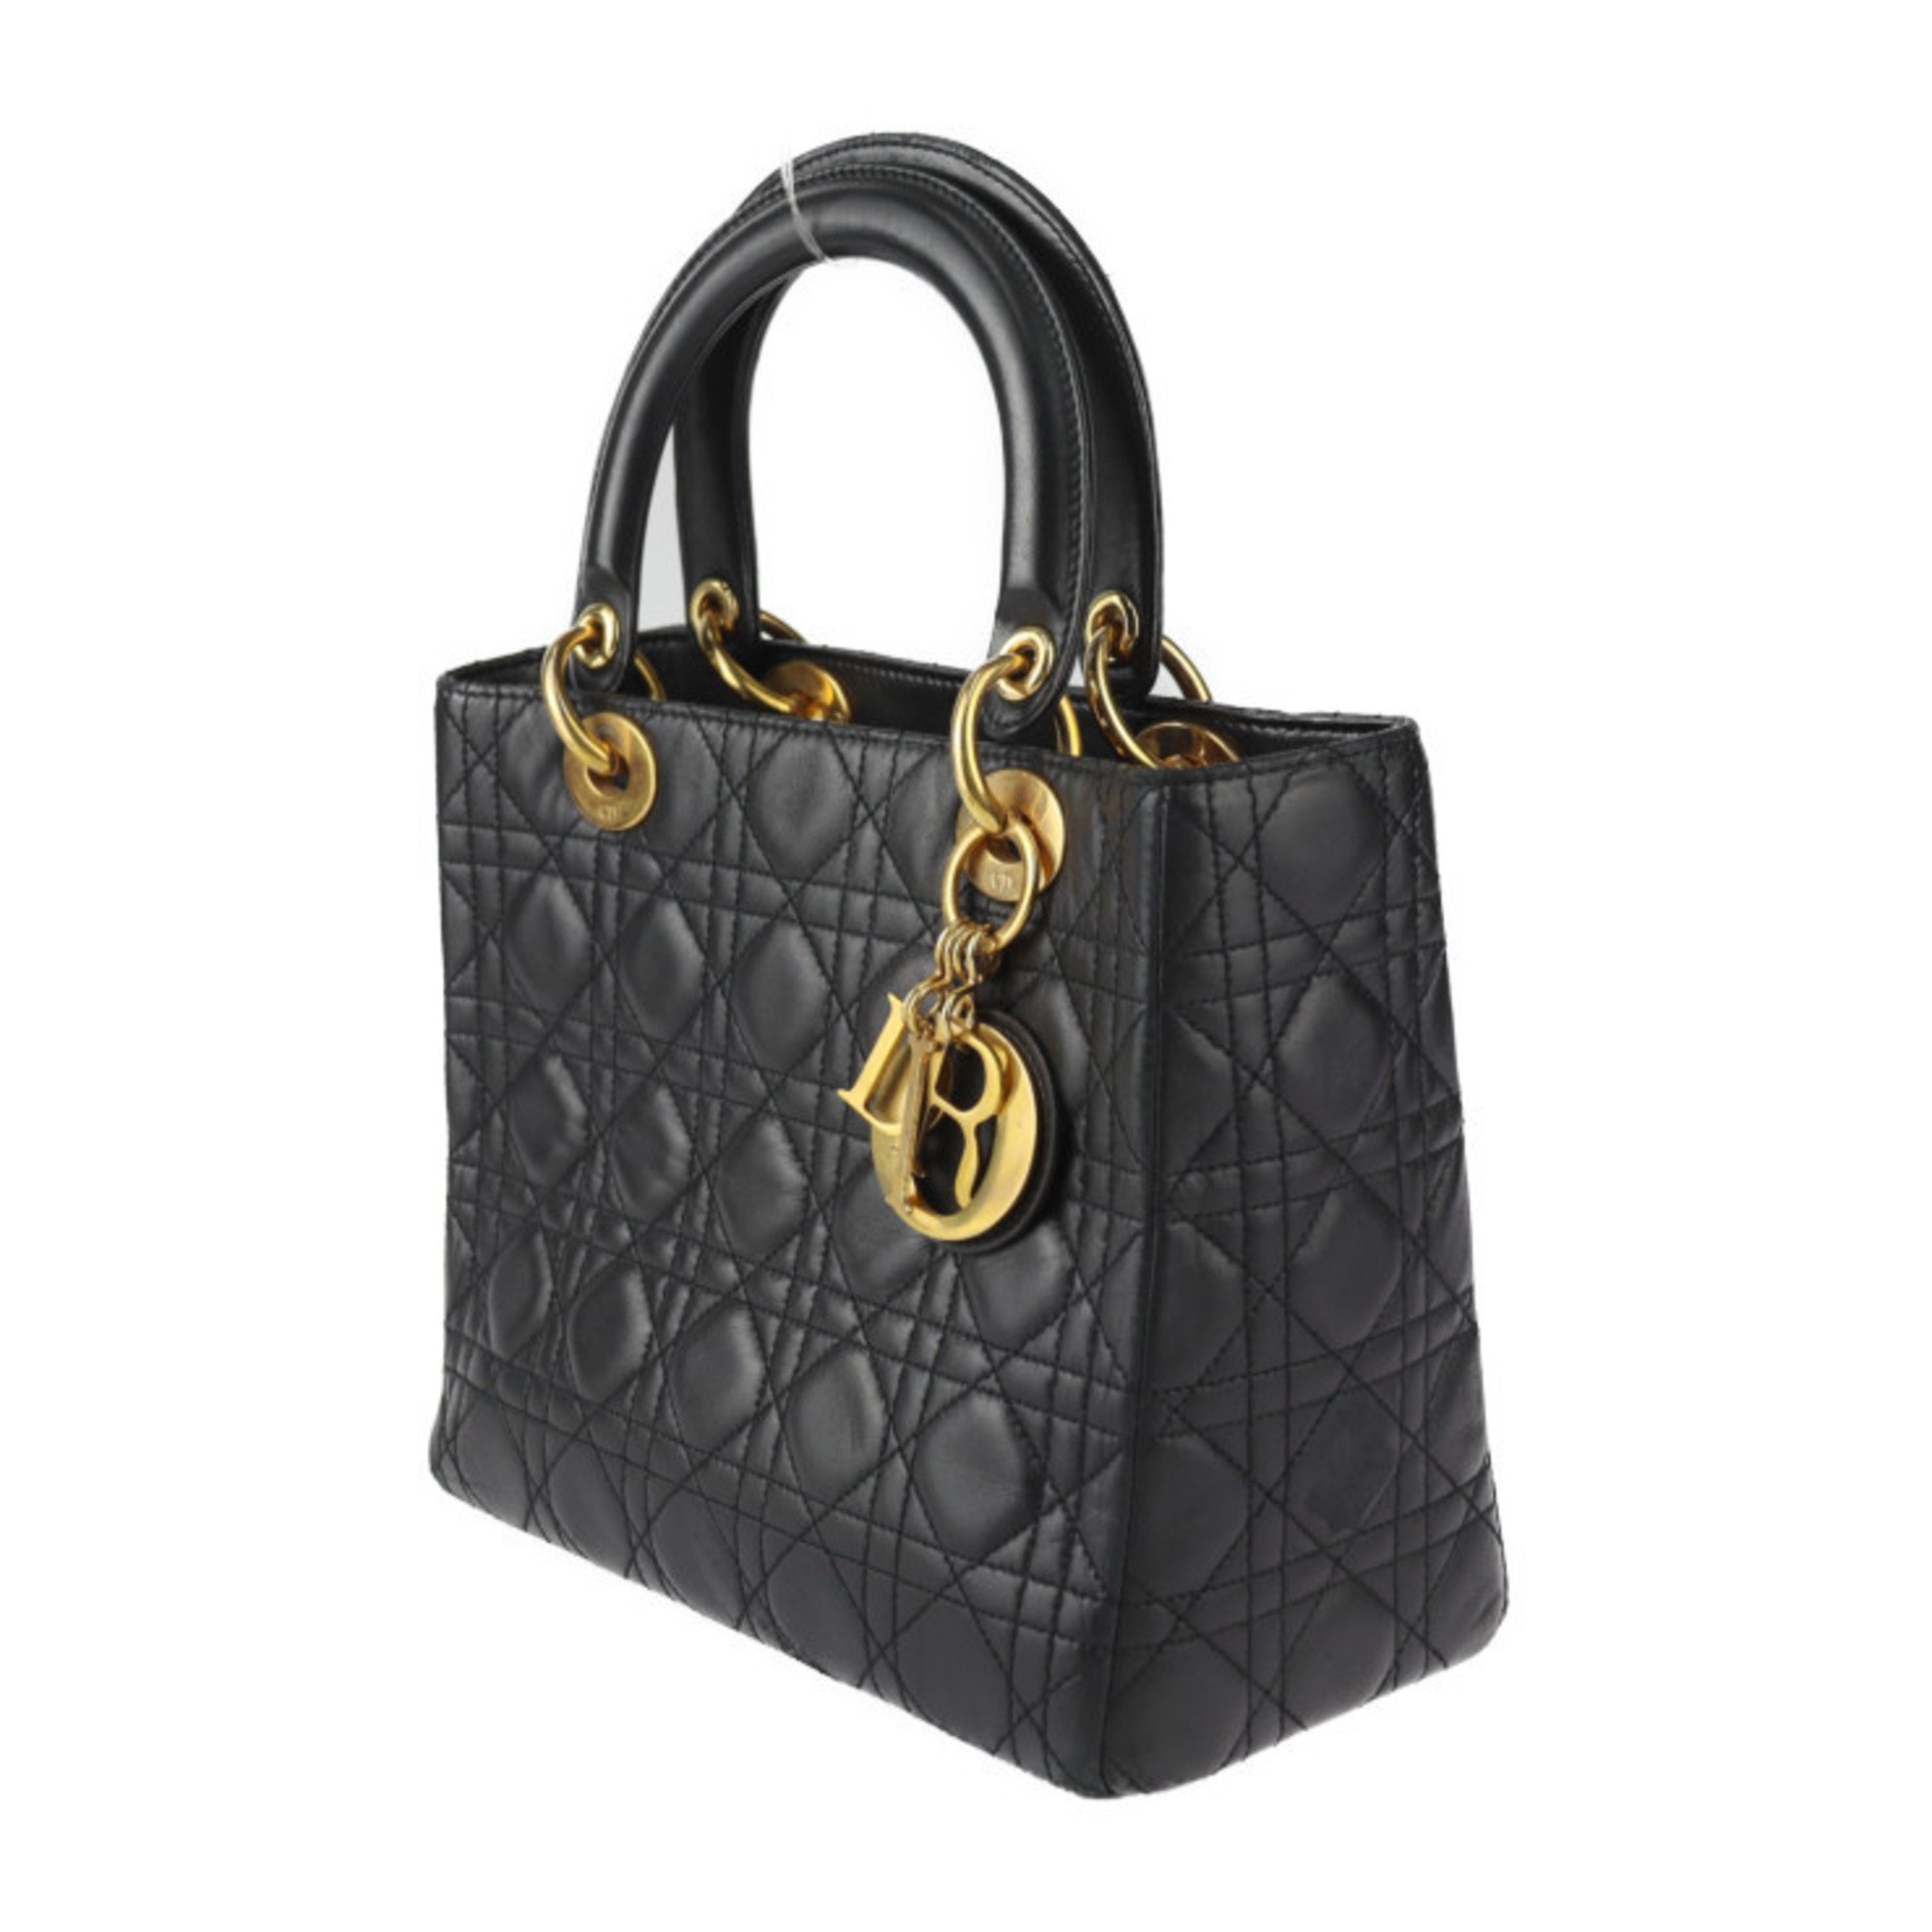 Christian Dior Lady Cannage Handbag Lambskin Black Shoulder Bag All Leather Classic Medium